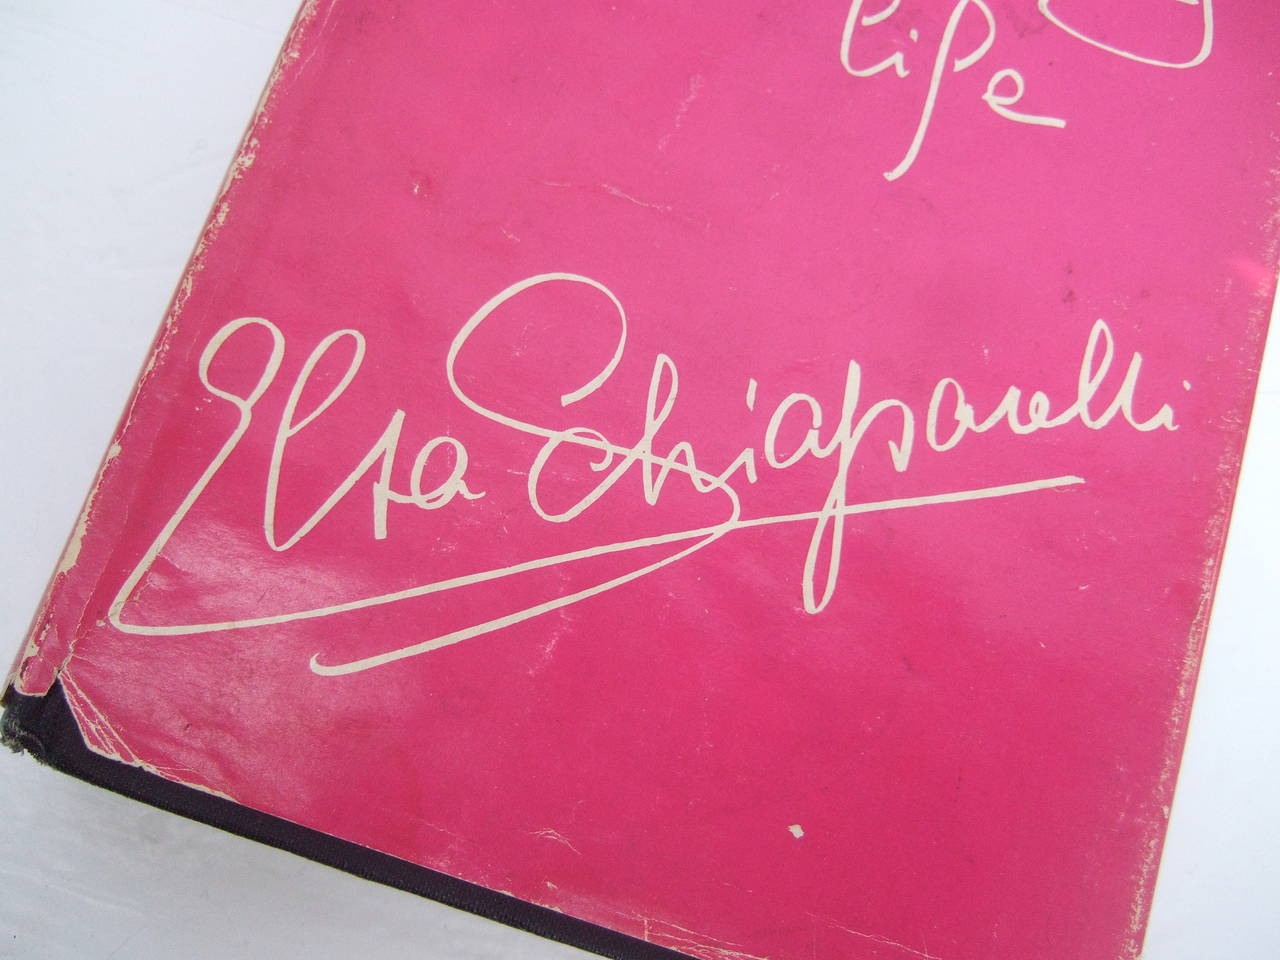 First edition of Elsa Schiaparelli's 